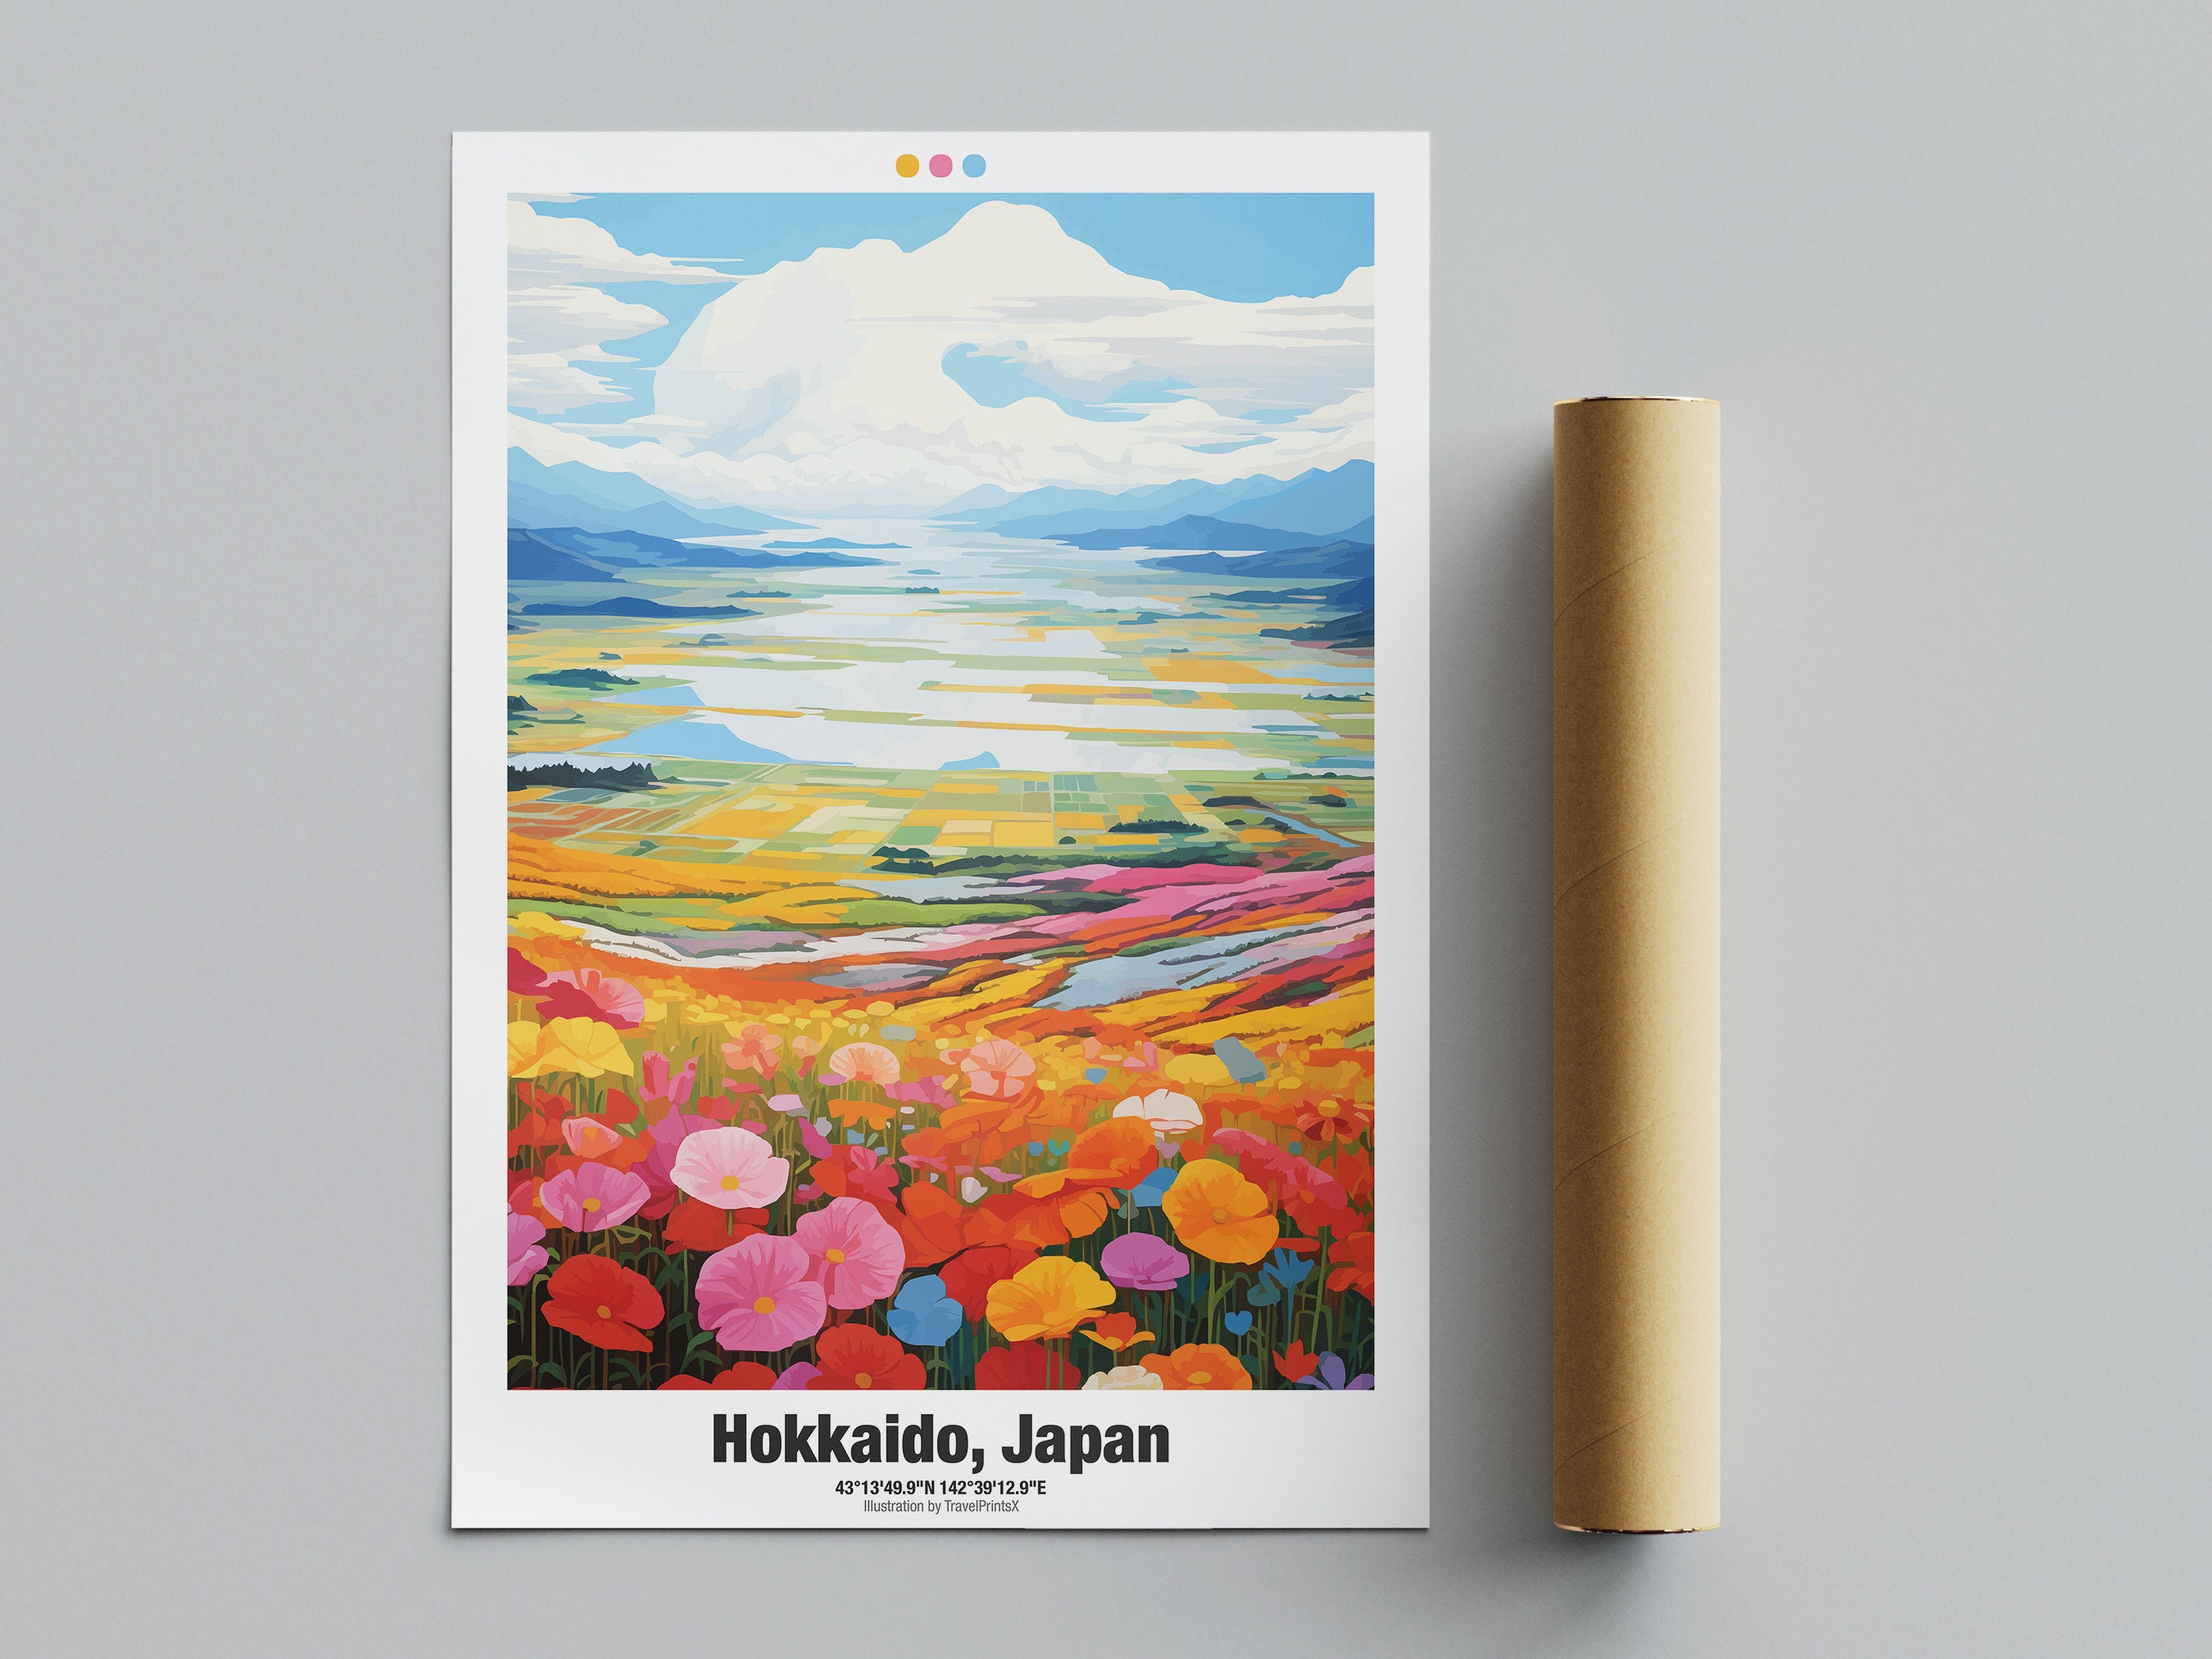 Field of Flowers (Kamifurano) Hokkaido Japan Poster Print - 48 x 16